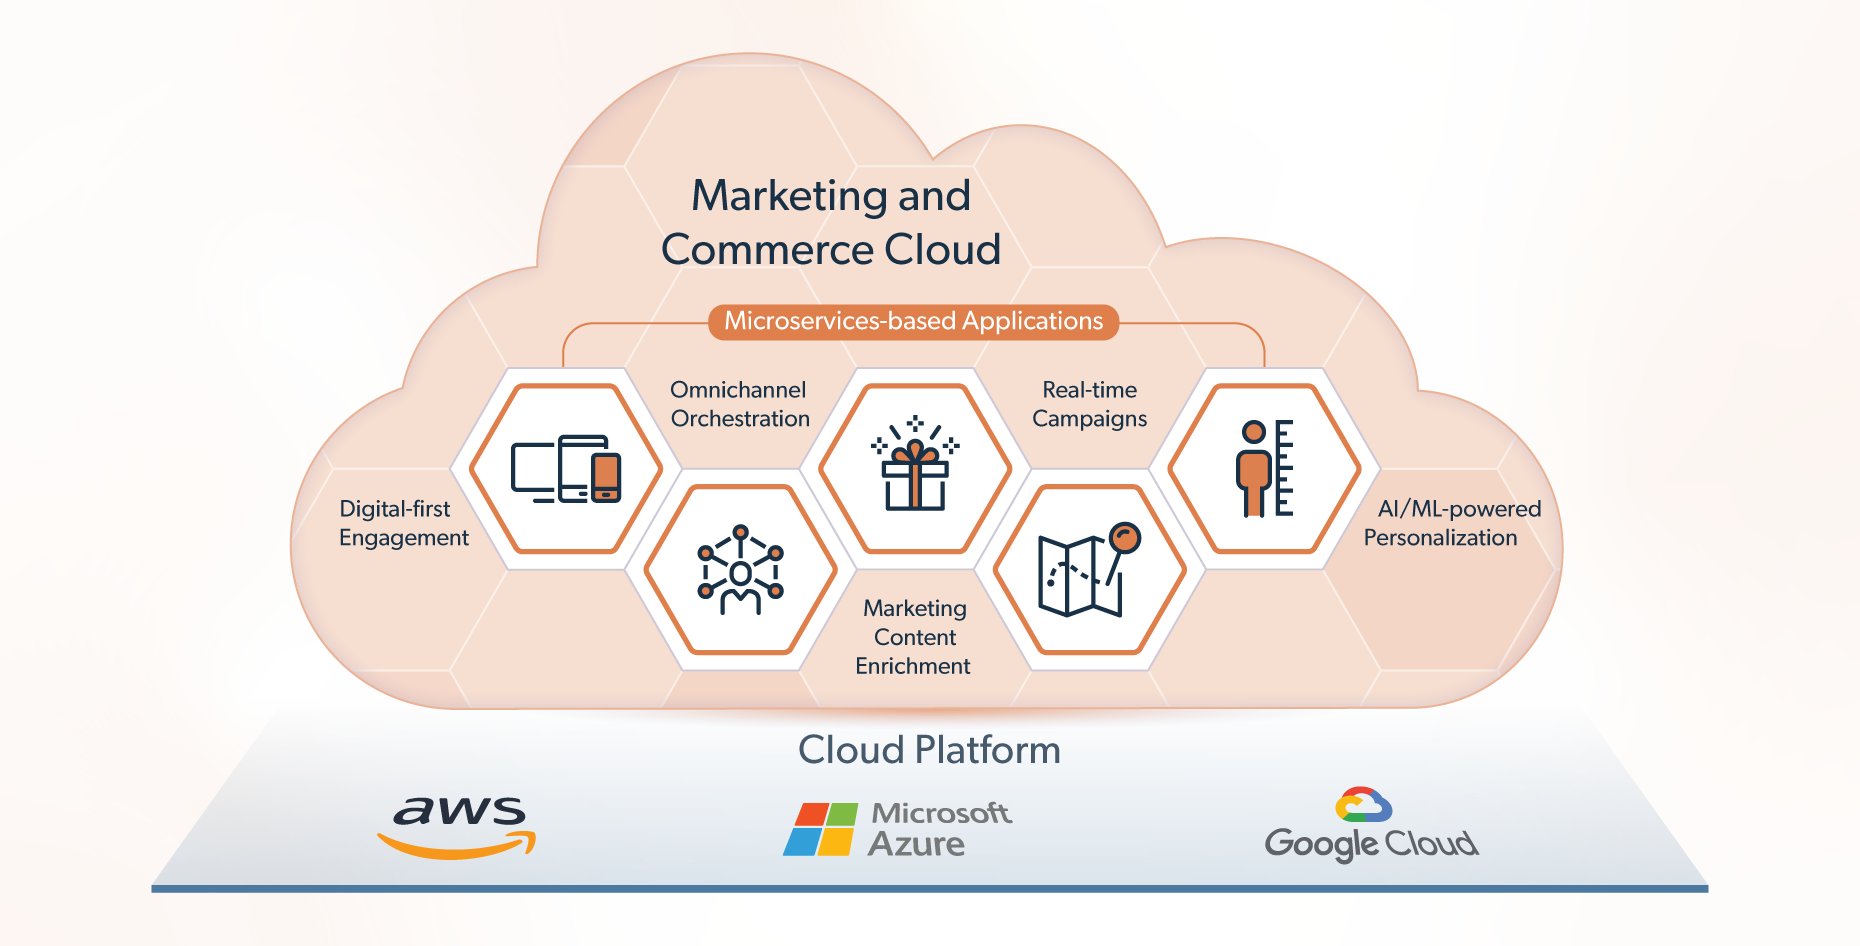 Netcracker Marketing and Commerce Cloud